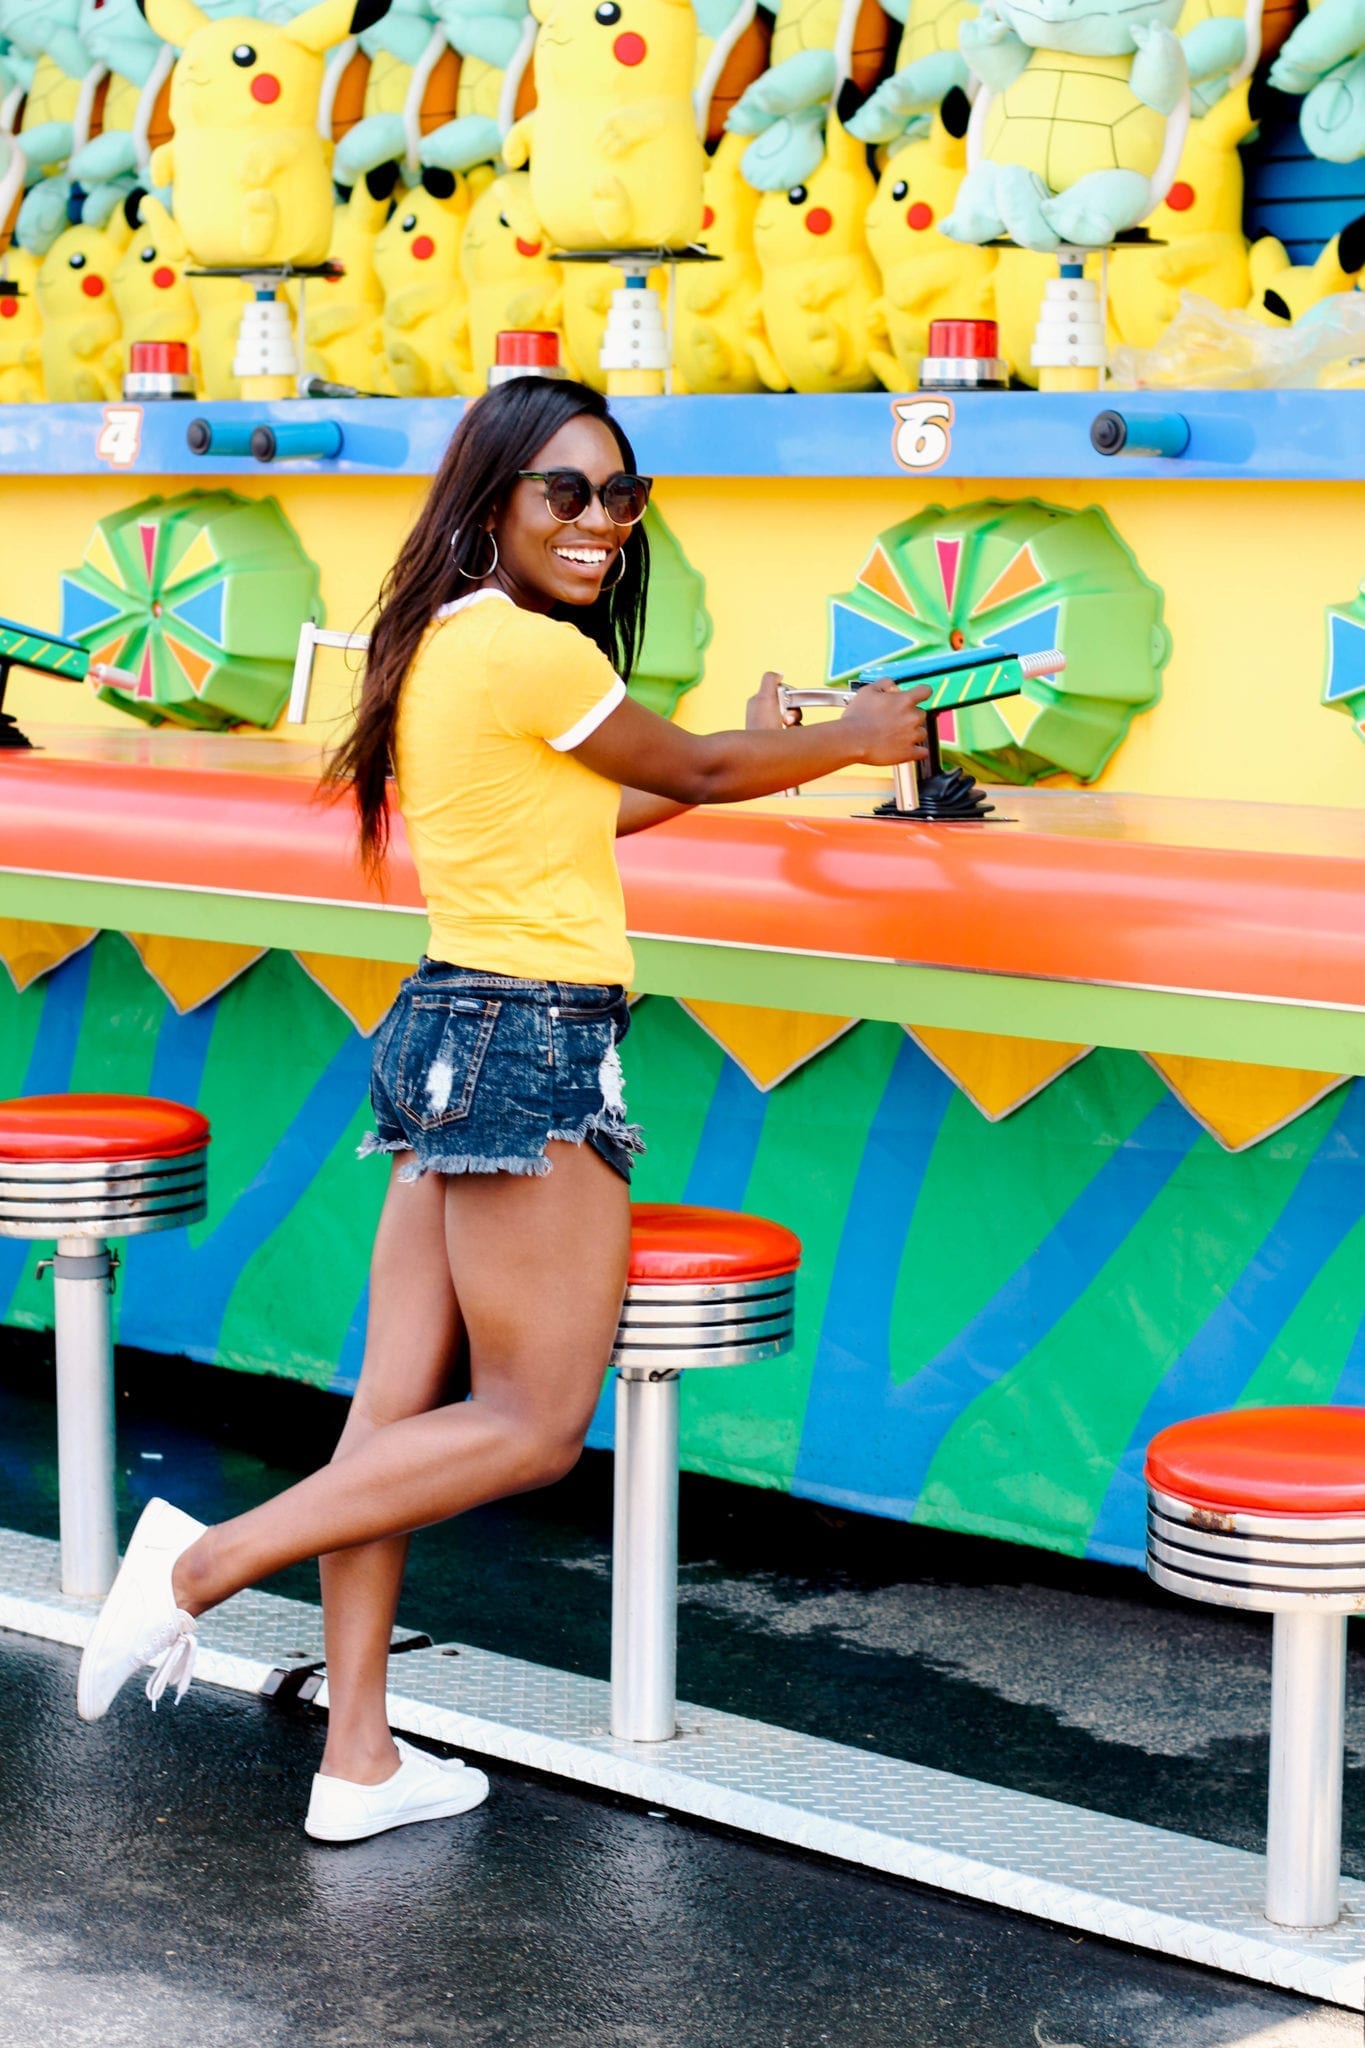 23 reasons why you should start a blog // Coney island photo shoot at Luna Park